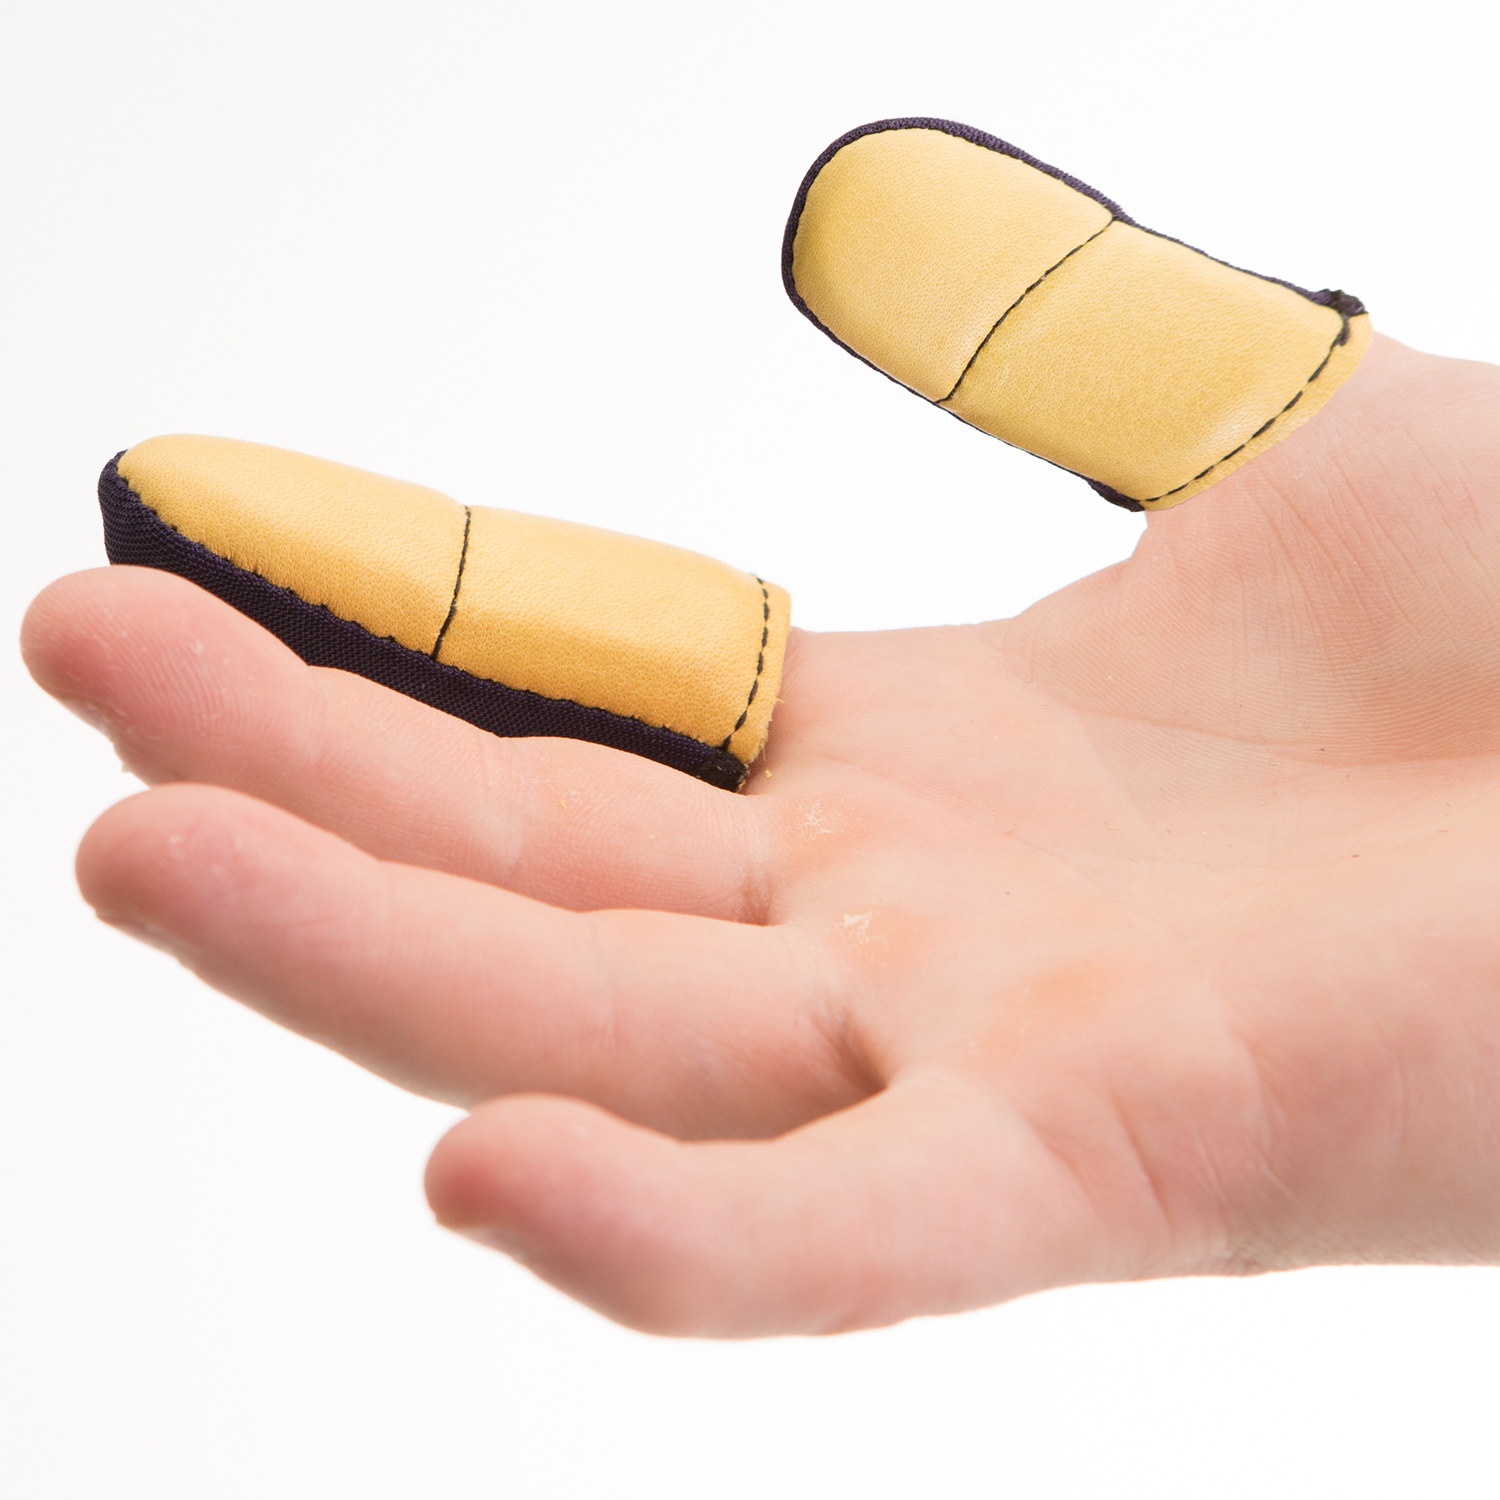 IMPACTO 102-20 LRG DZ THUMB GUARD GRAIN LEATHER - Finger Support